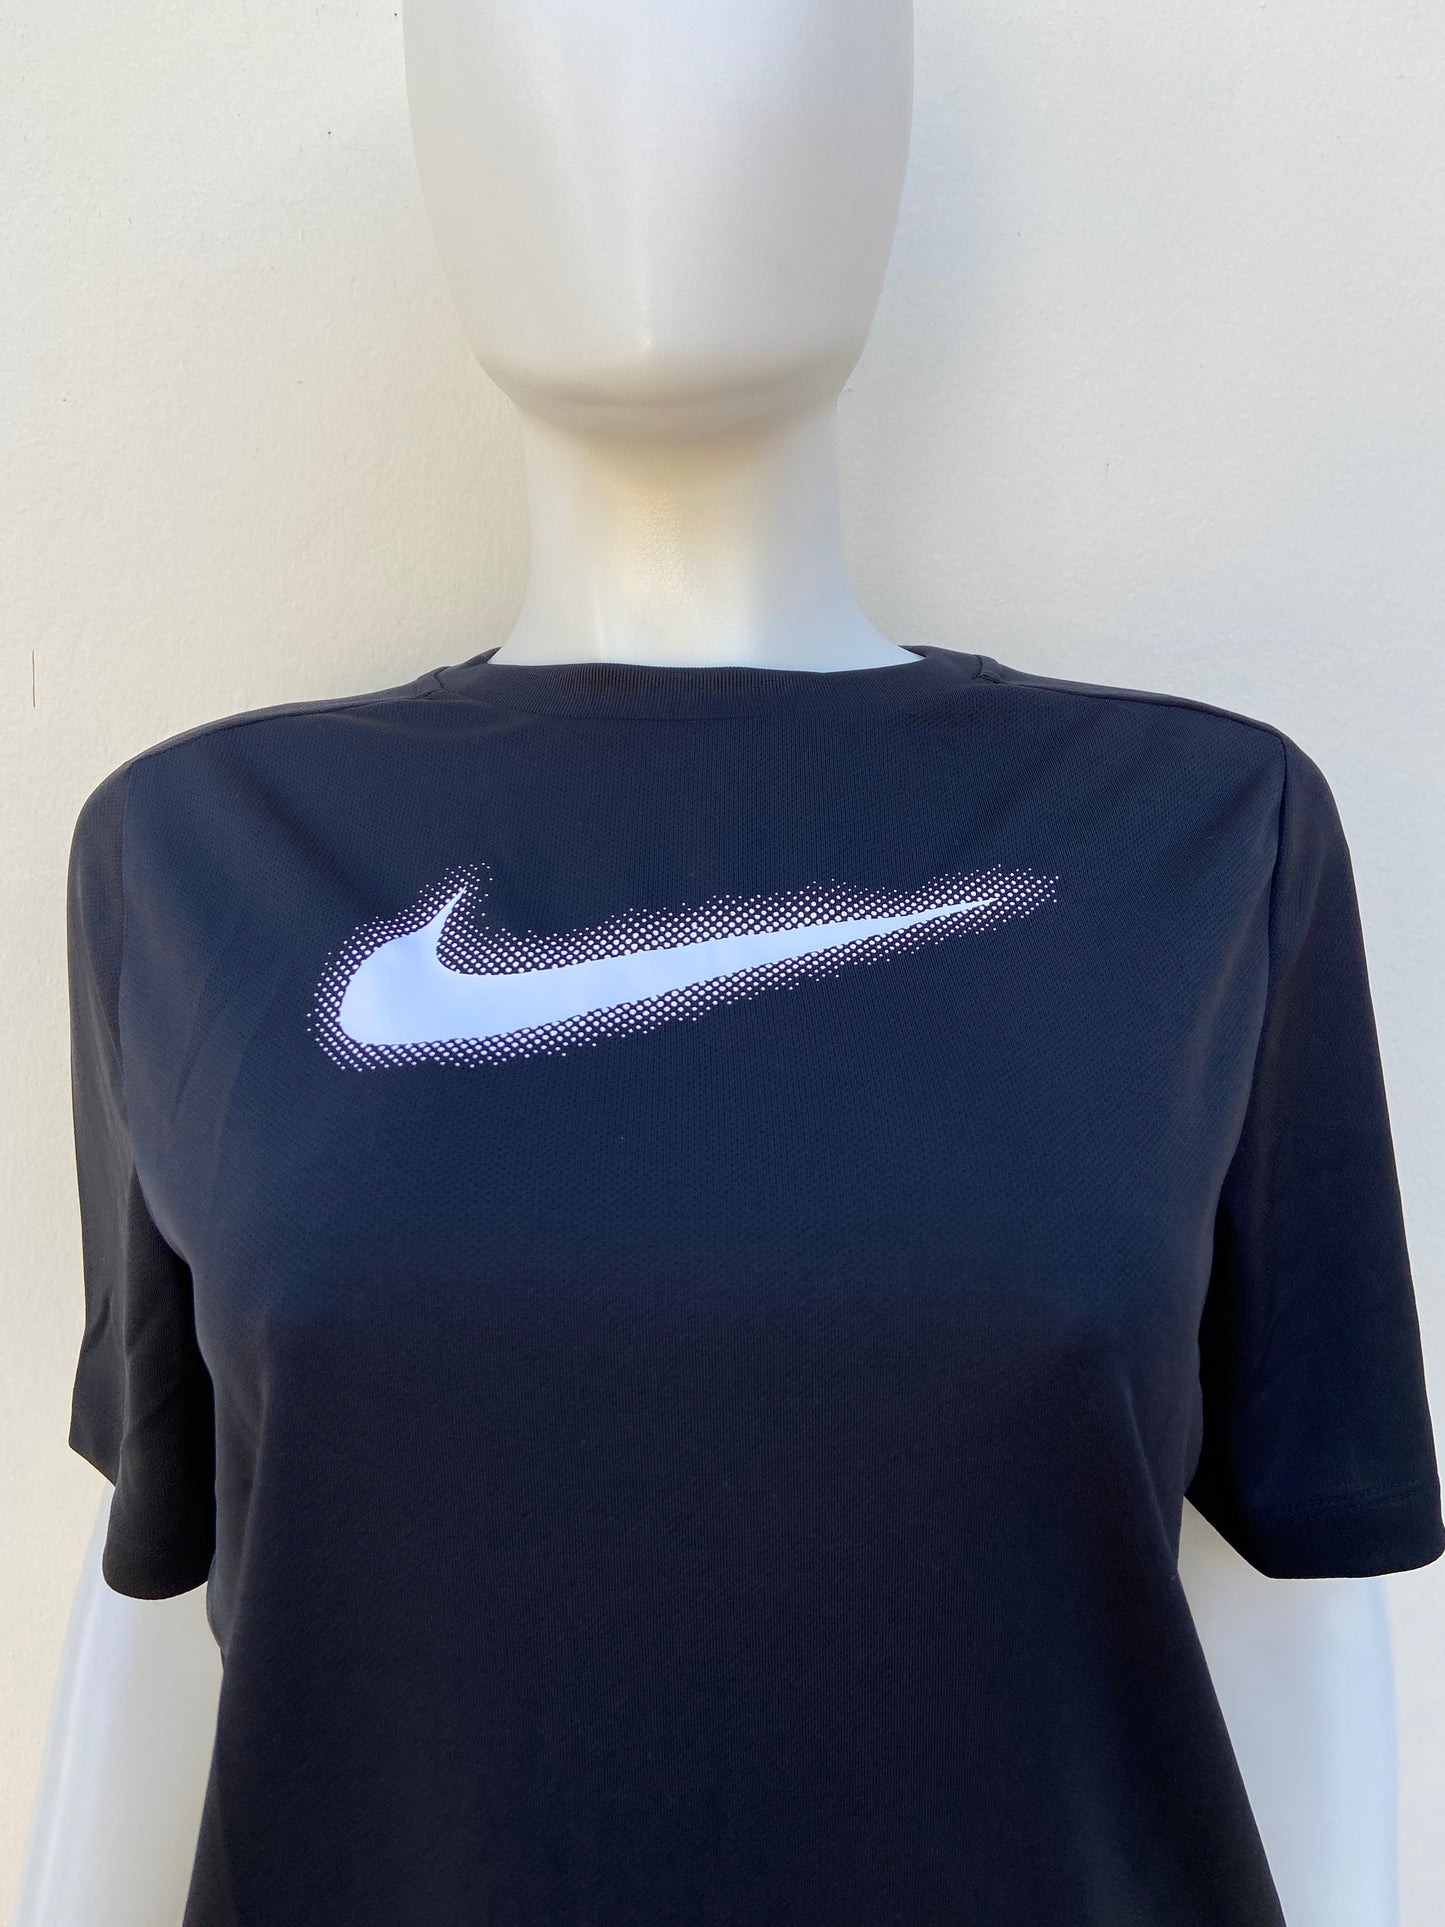 T-shirt Nike original negro con logotipo de Nike En blanco.